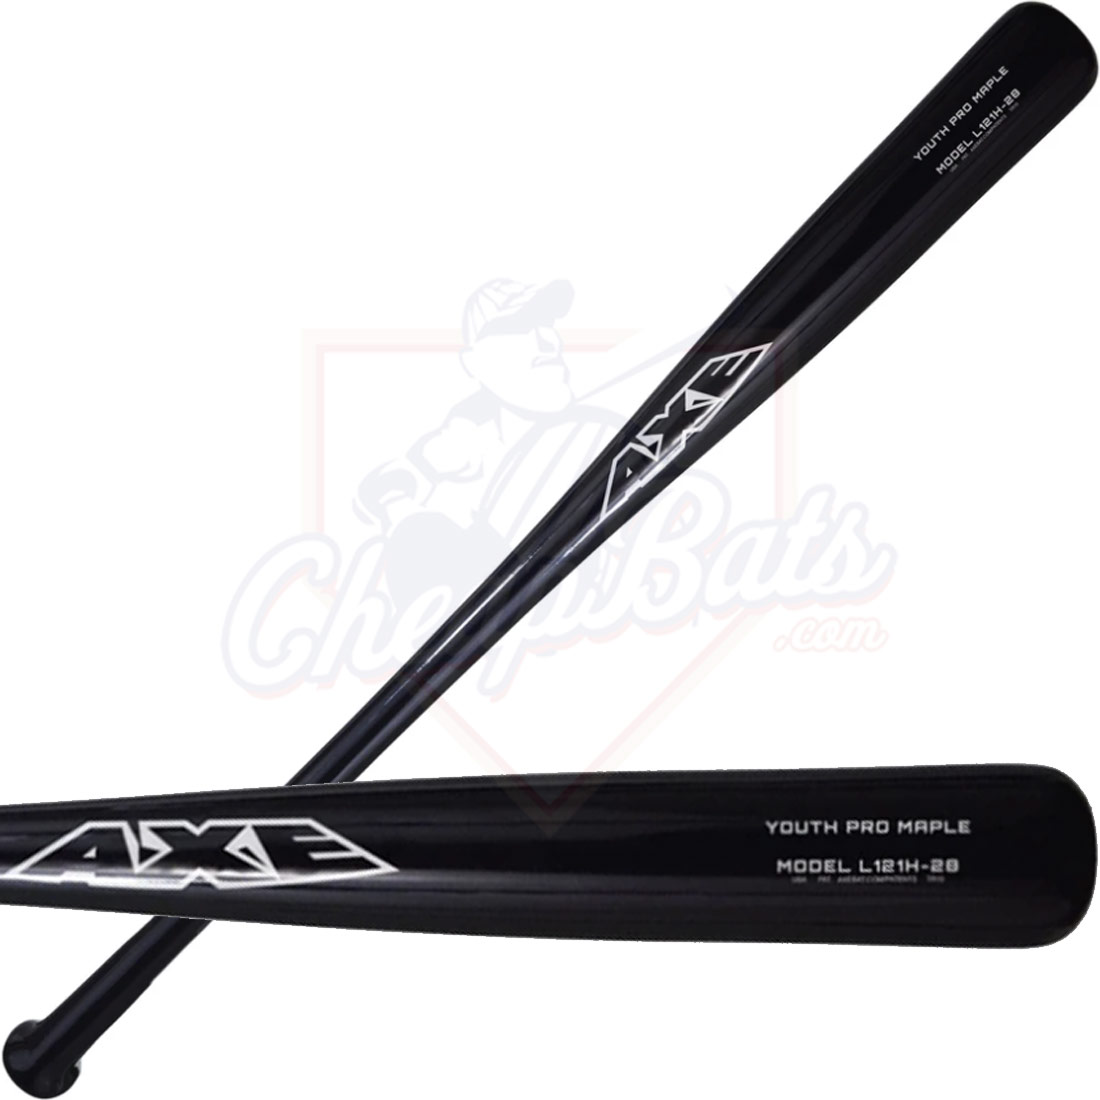 Axe Pro Youth Maple Wood Baseball Bat L121H